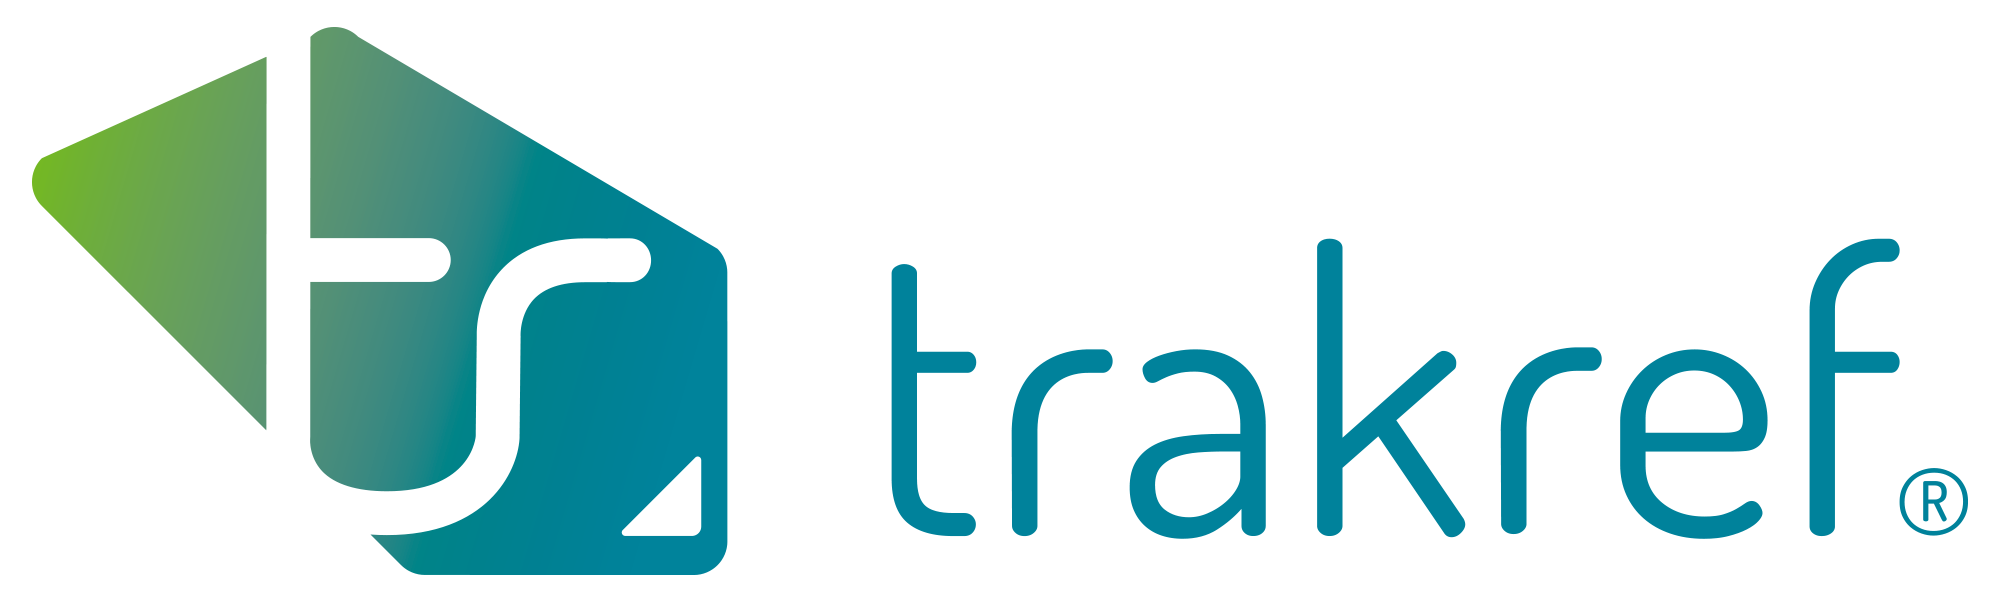 trakref-logo-lrg-rgb-1.png